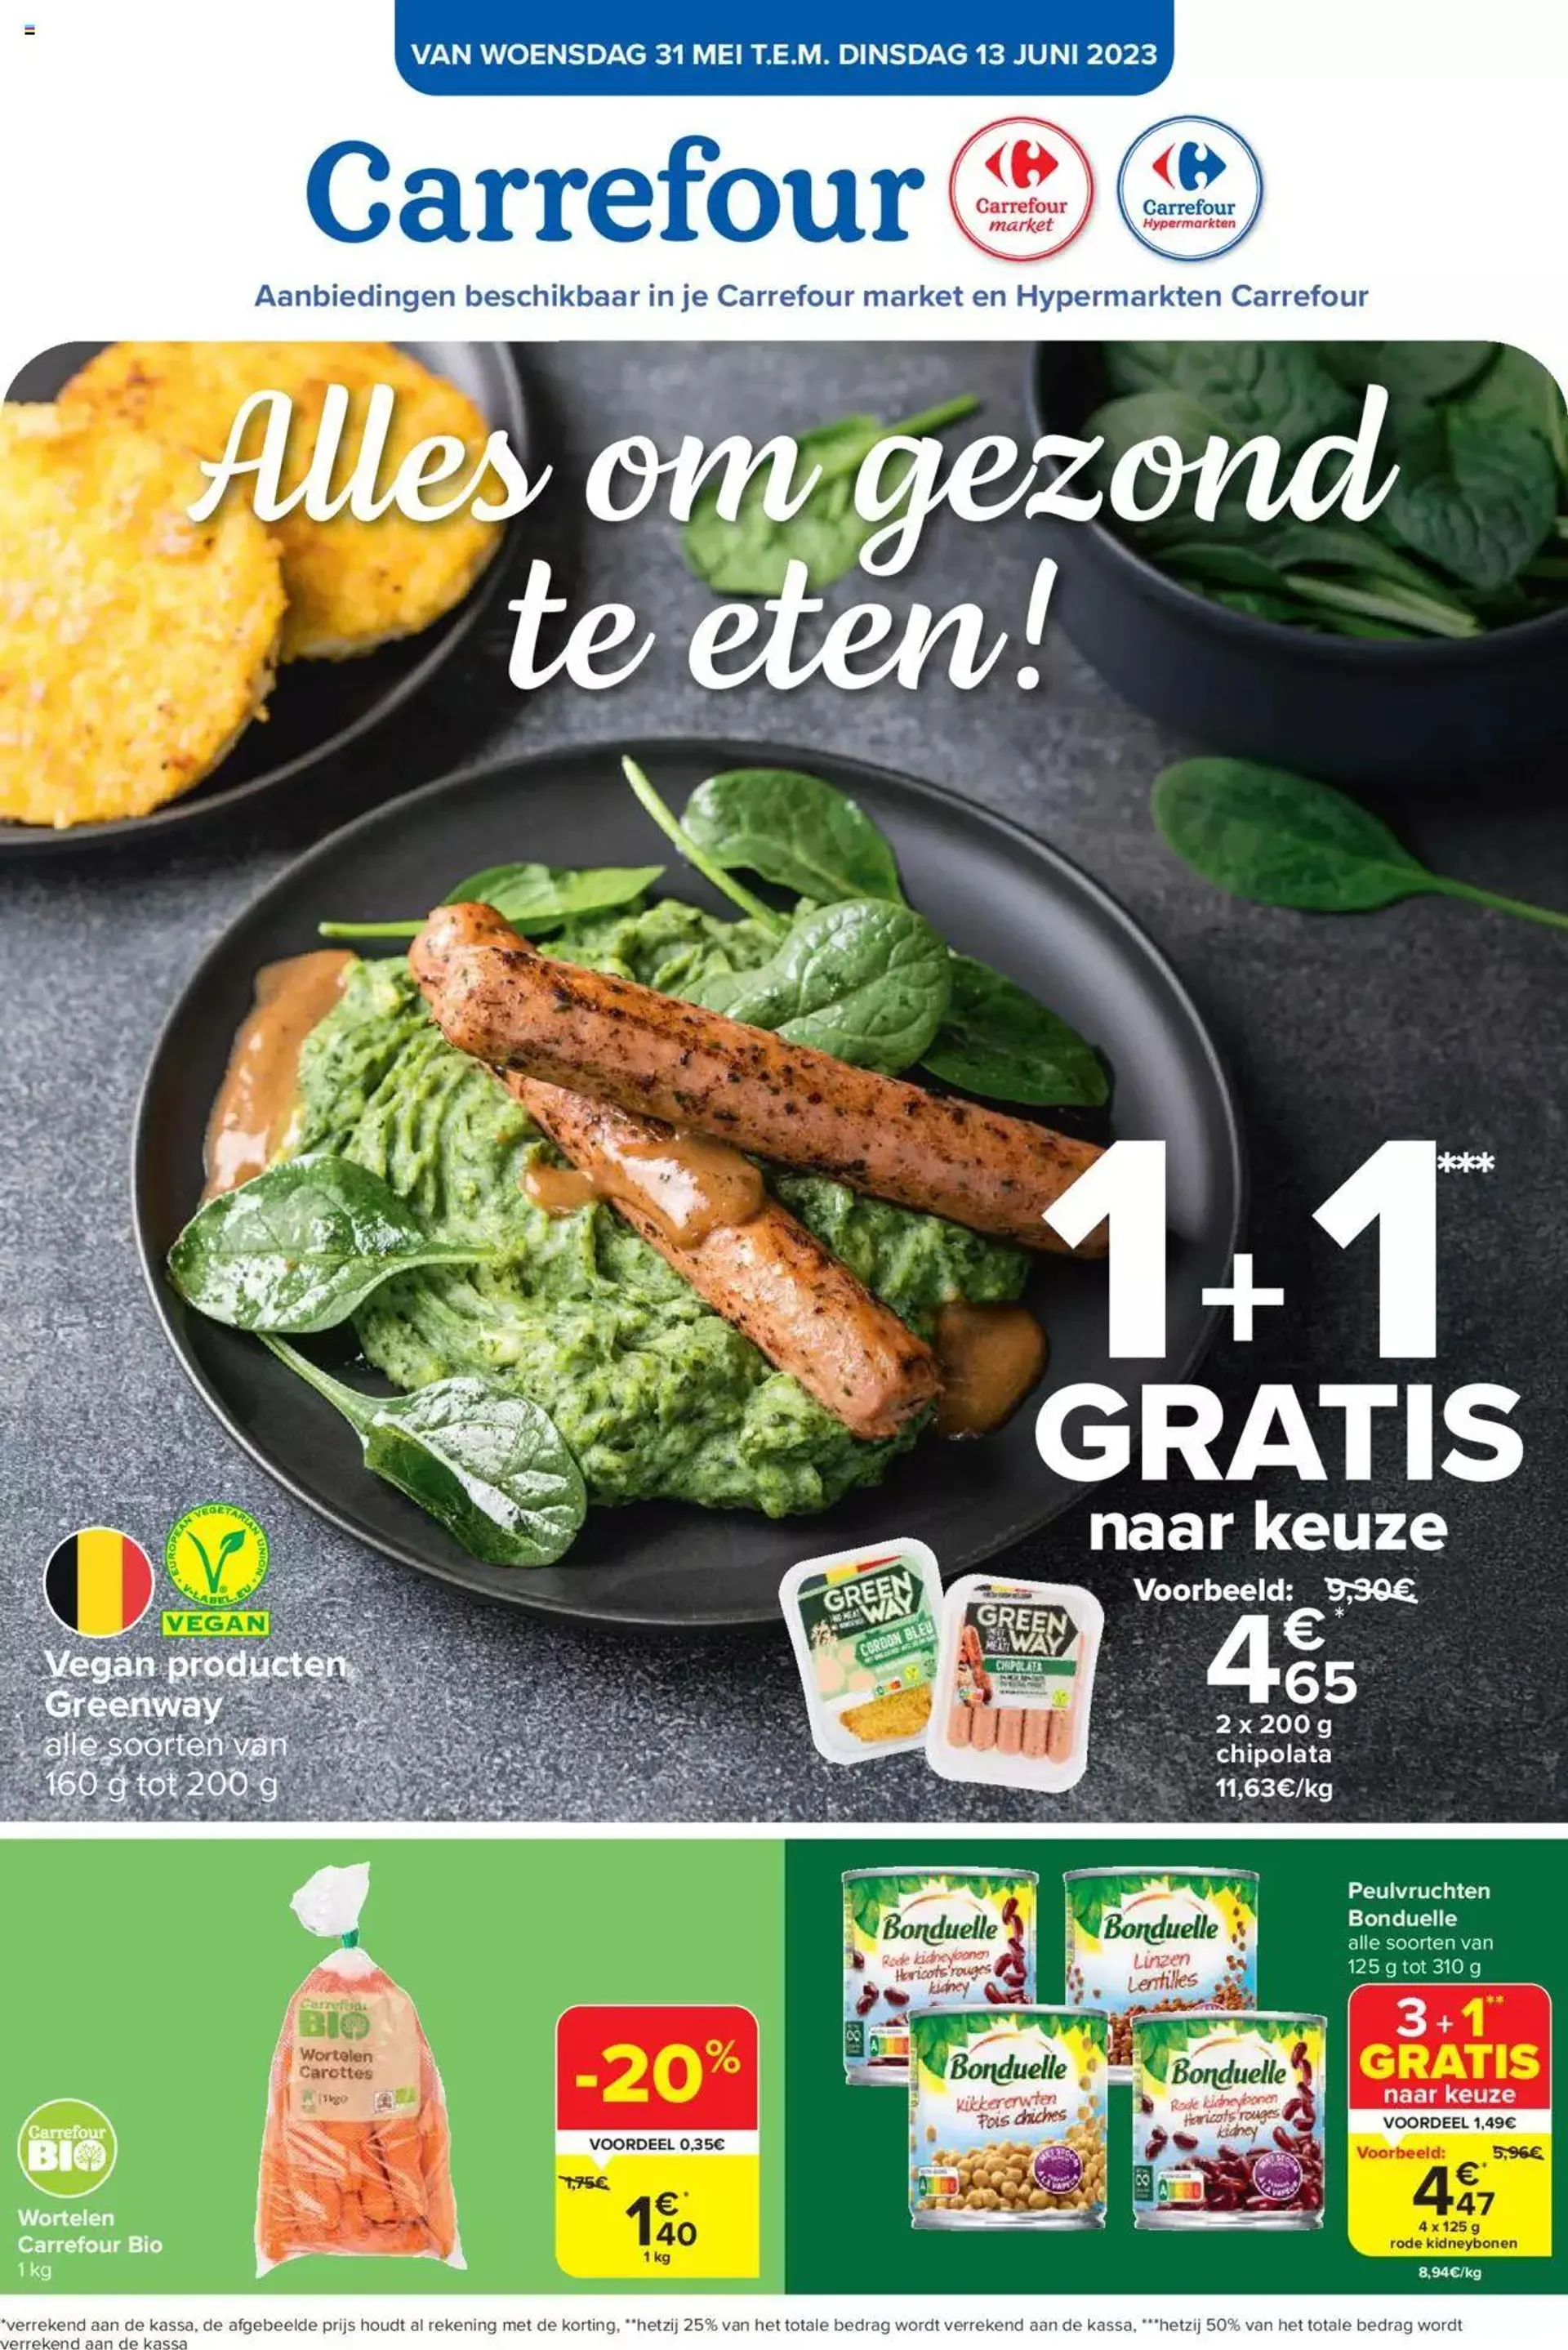 Carrefour - Alles om gezond te eten - 0